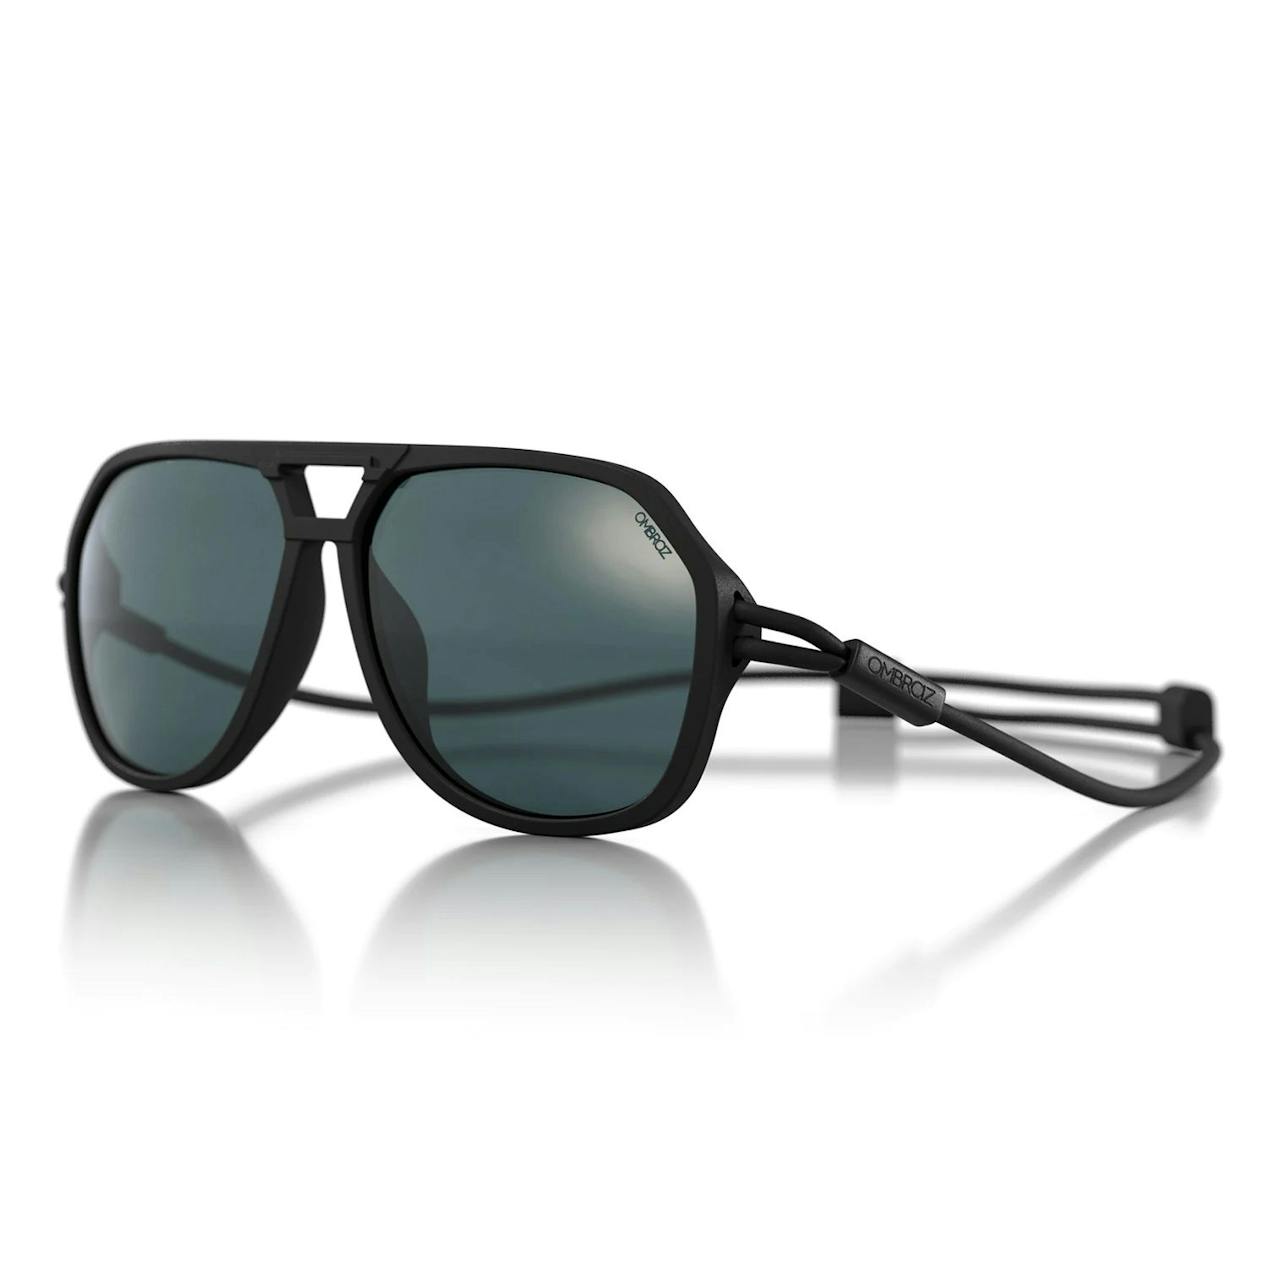 Ombraz Classic Armless Sunglasses - Charcoal/Polarized Grey, Sunglasses